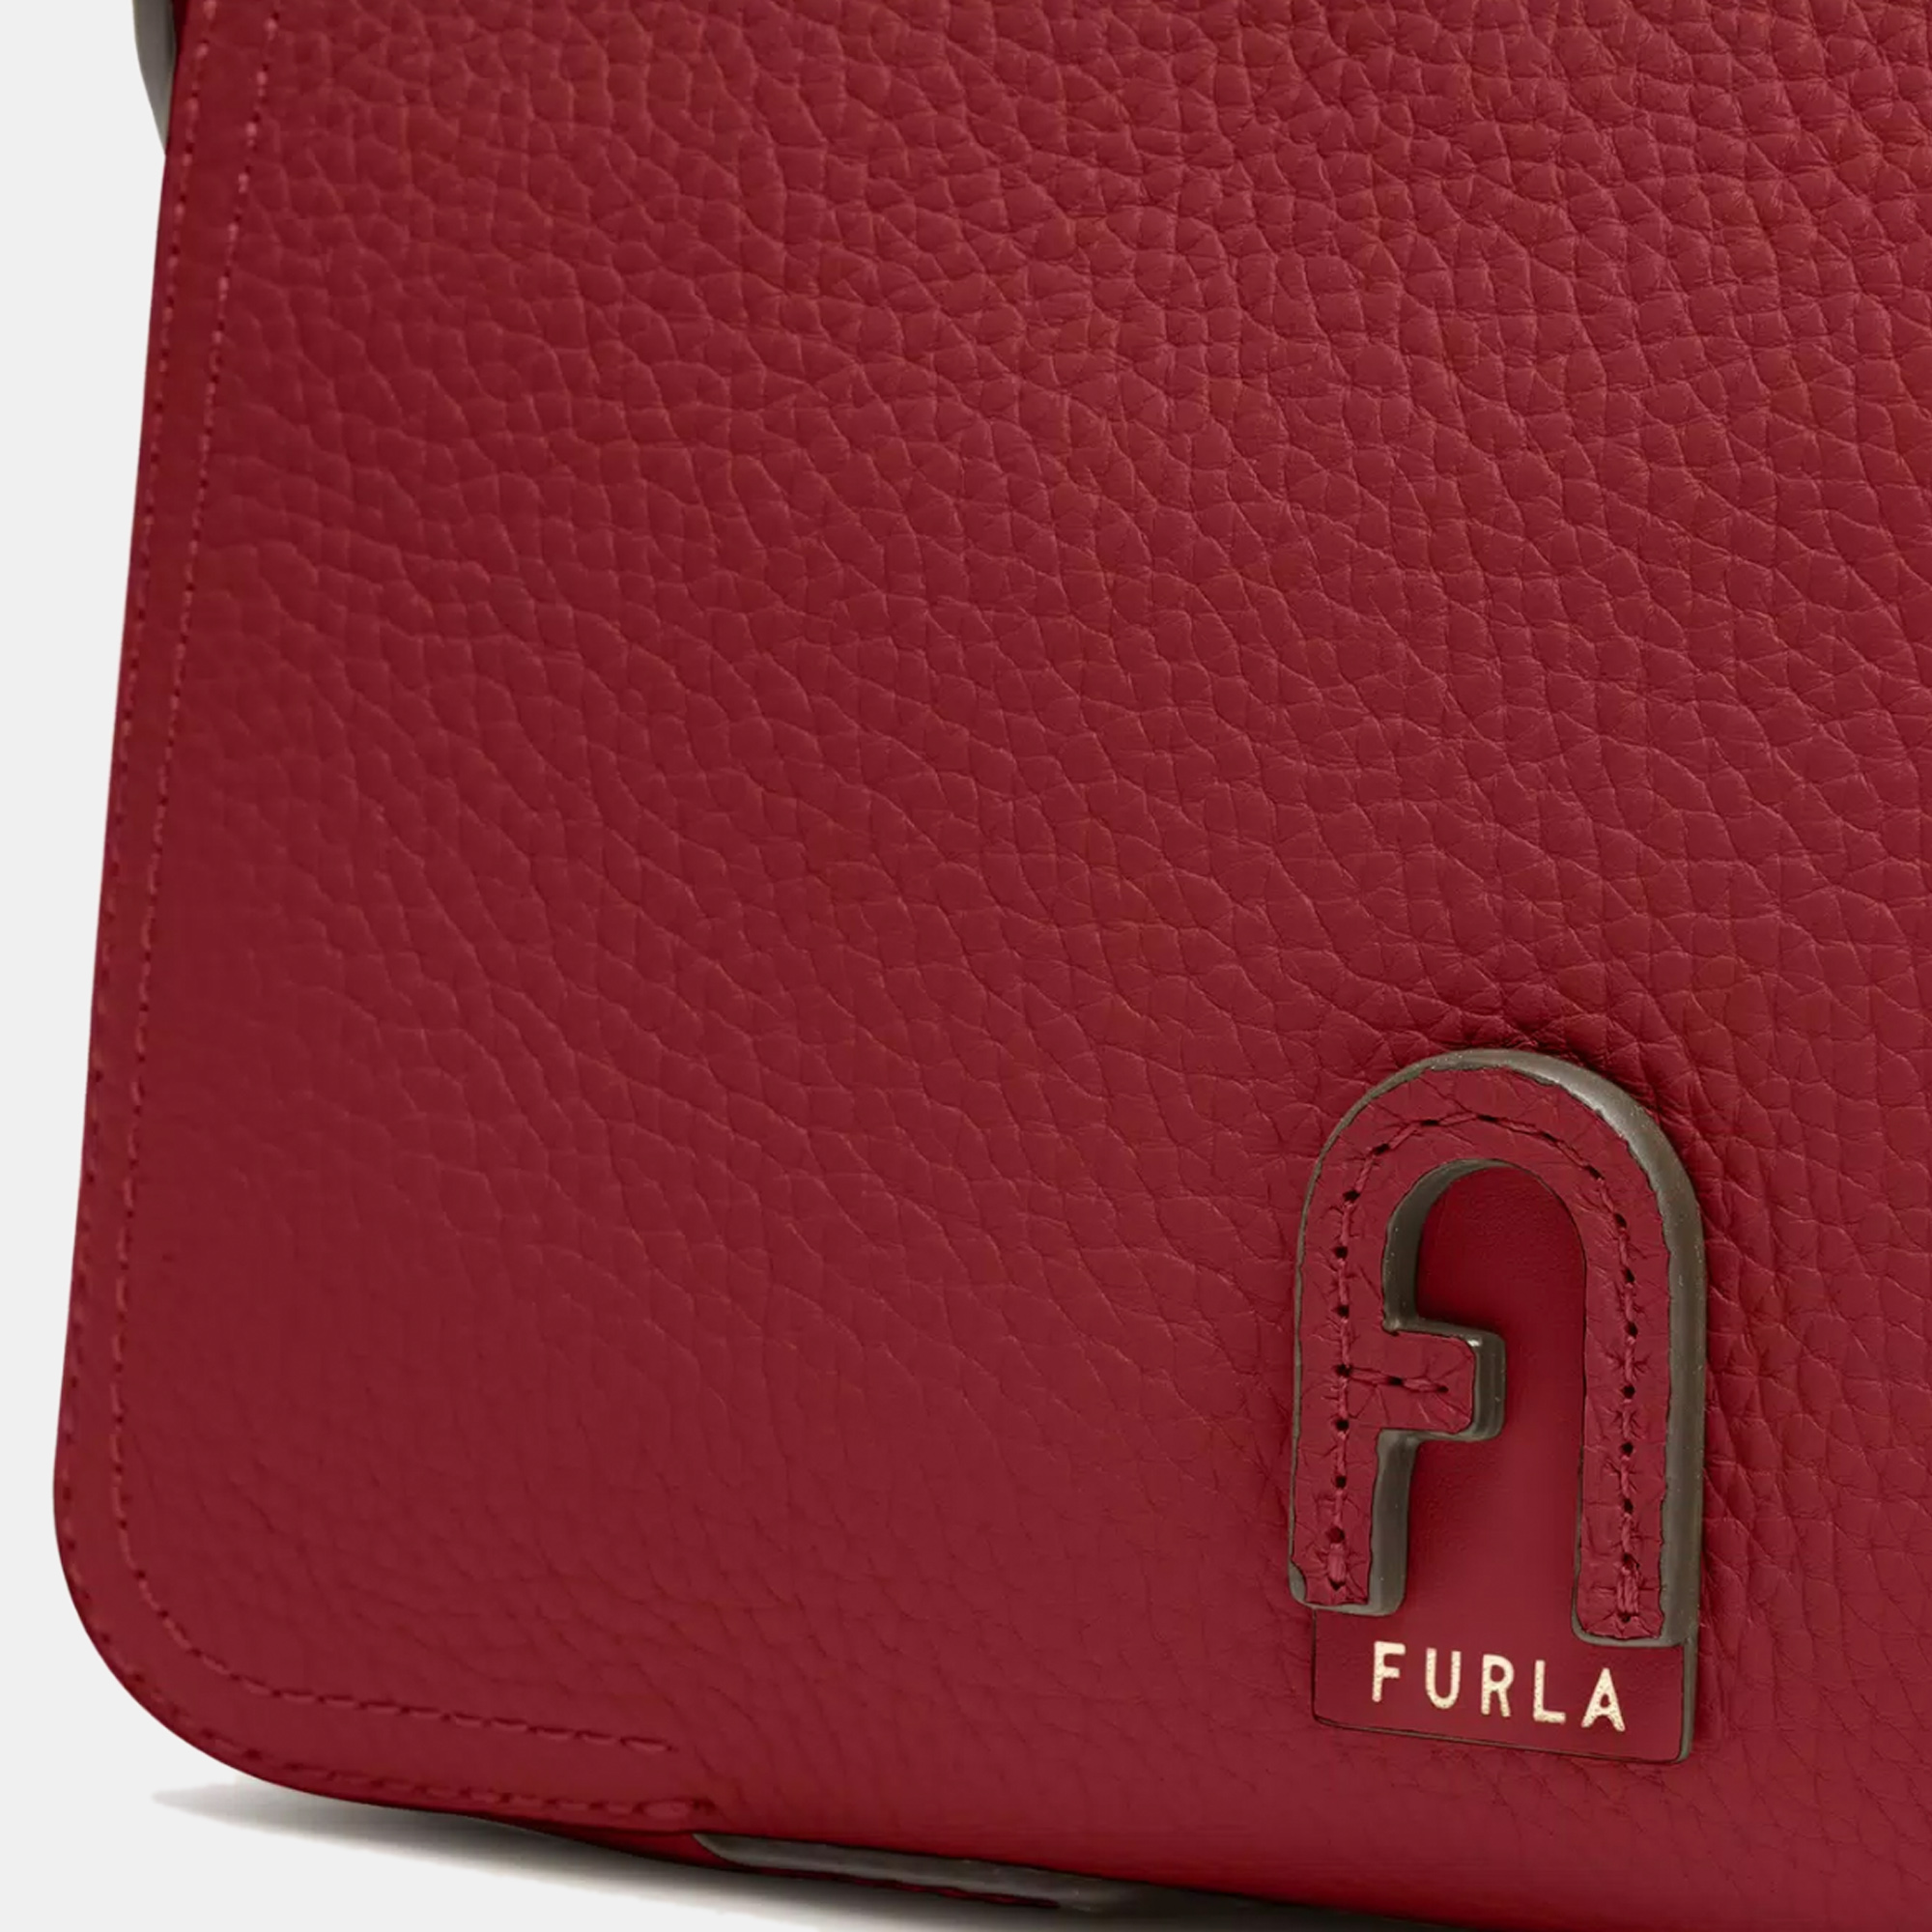 Furla Red Leather Atena Crossbody Bag